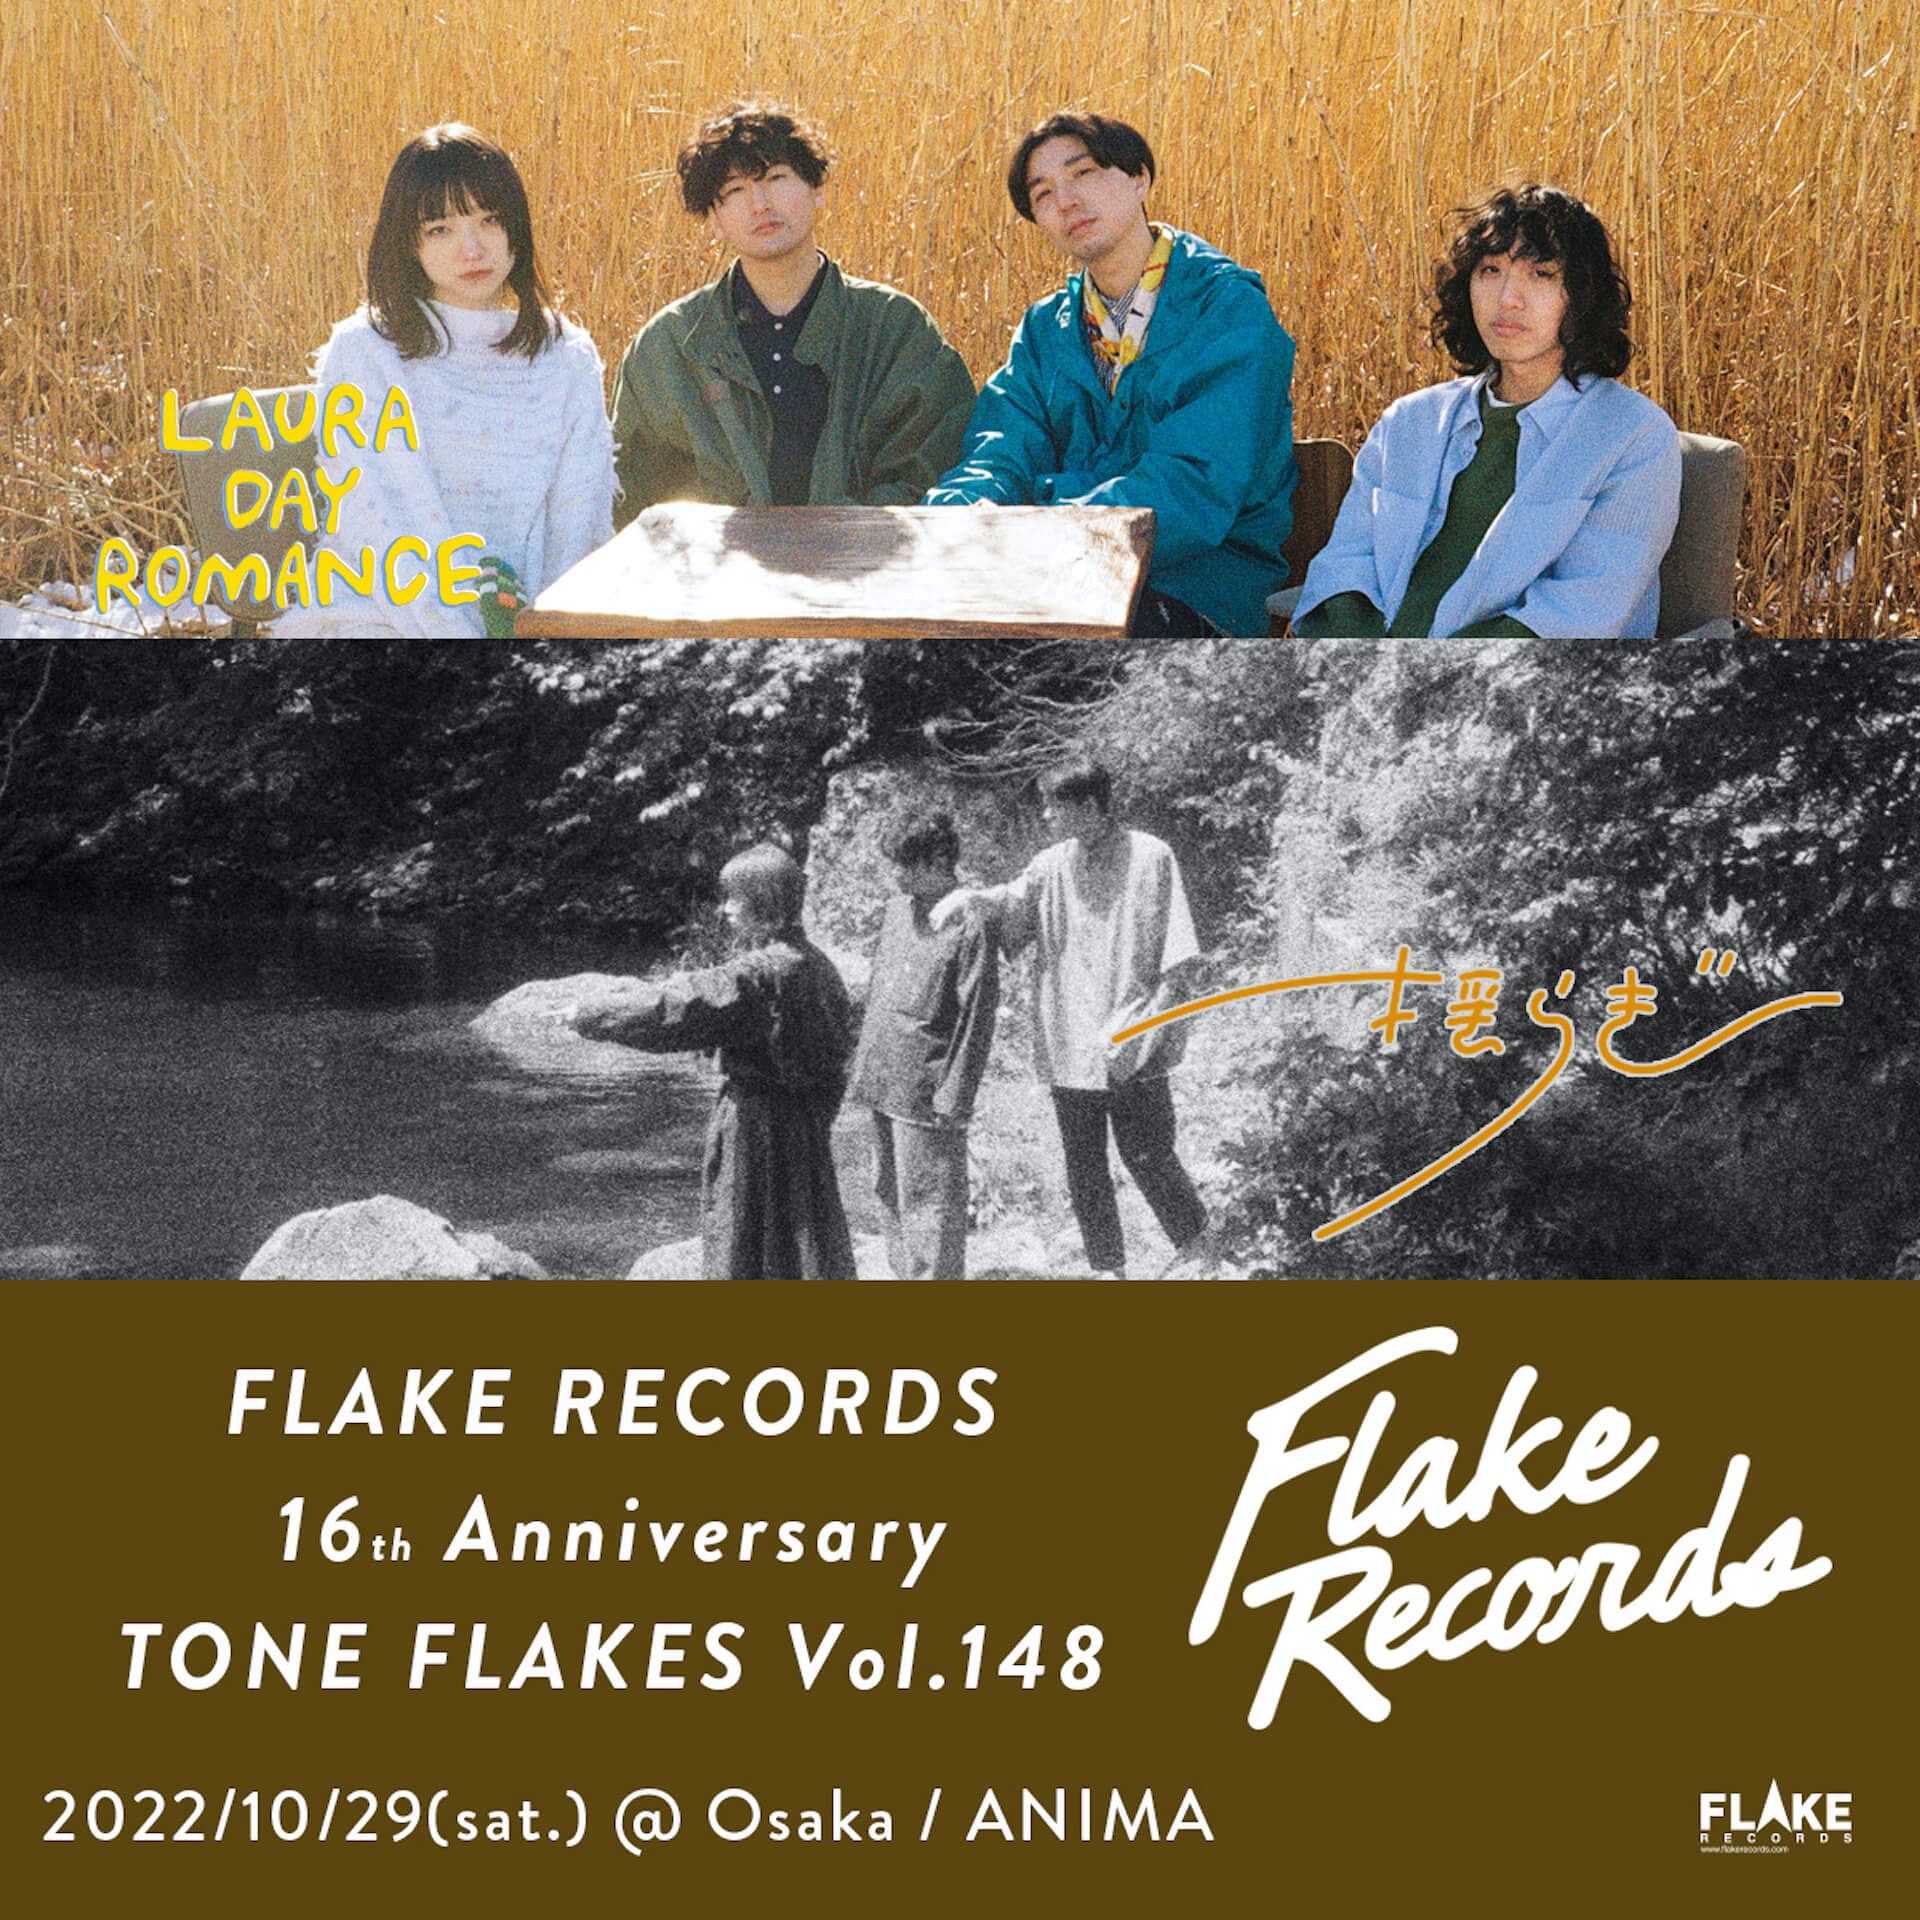 FLAKE RECORDSの16周年企画イベント第2弾に揺らぎとLaura day romanceが出演 music220804-yuragi-lauradayromance2